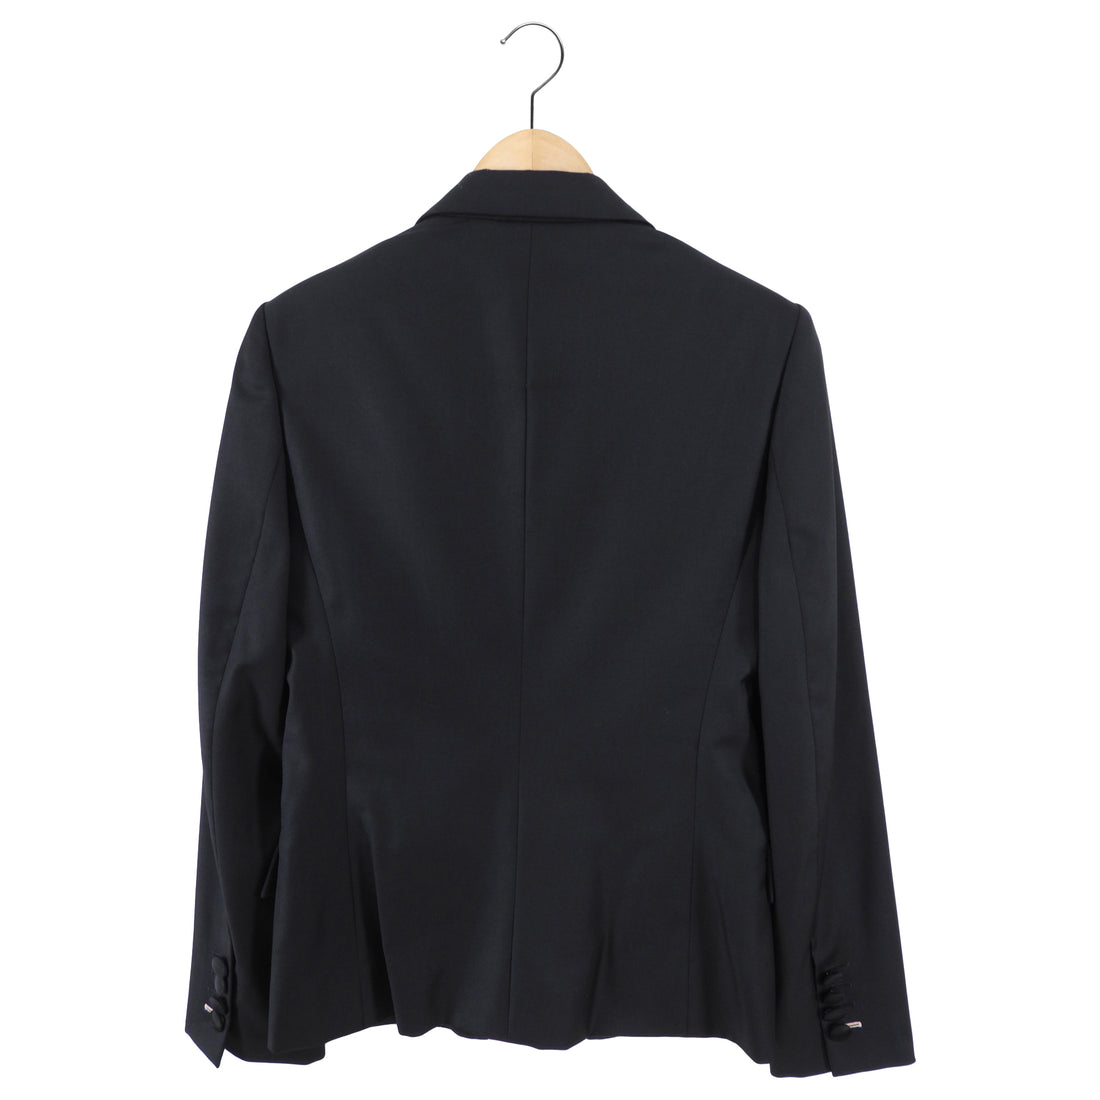 Stella McCartney Black Notched Collar Tuxedo Jacket - IT42 / USA 6